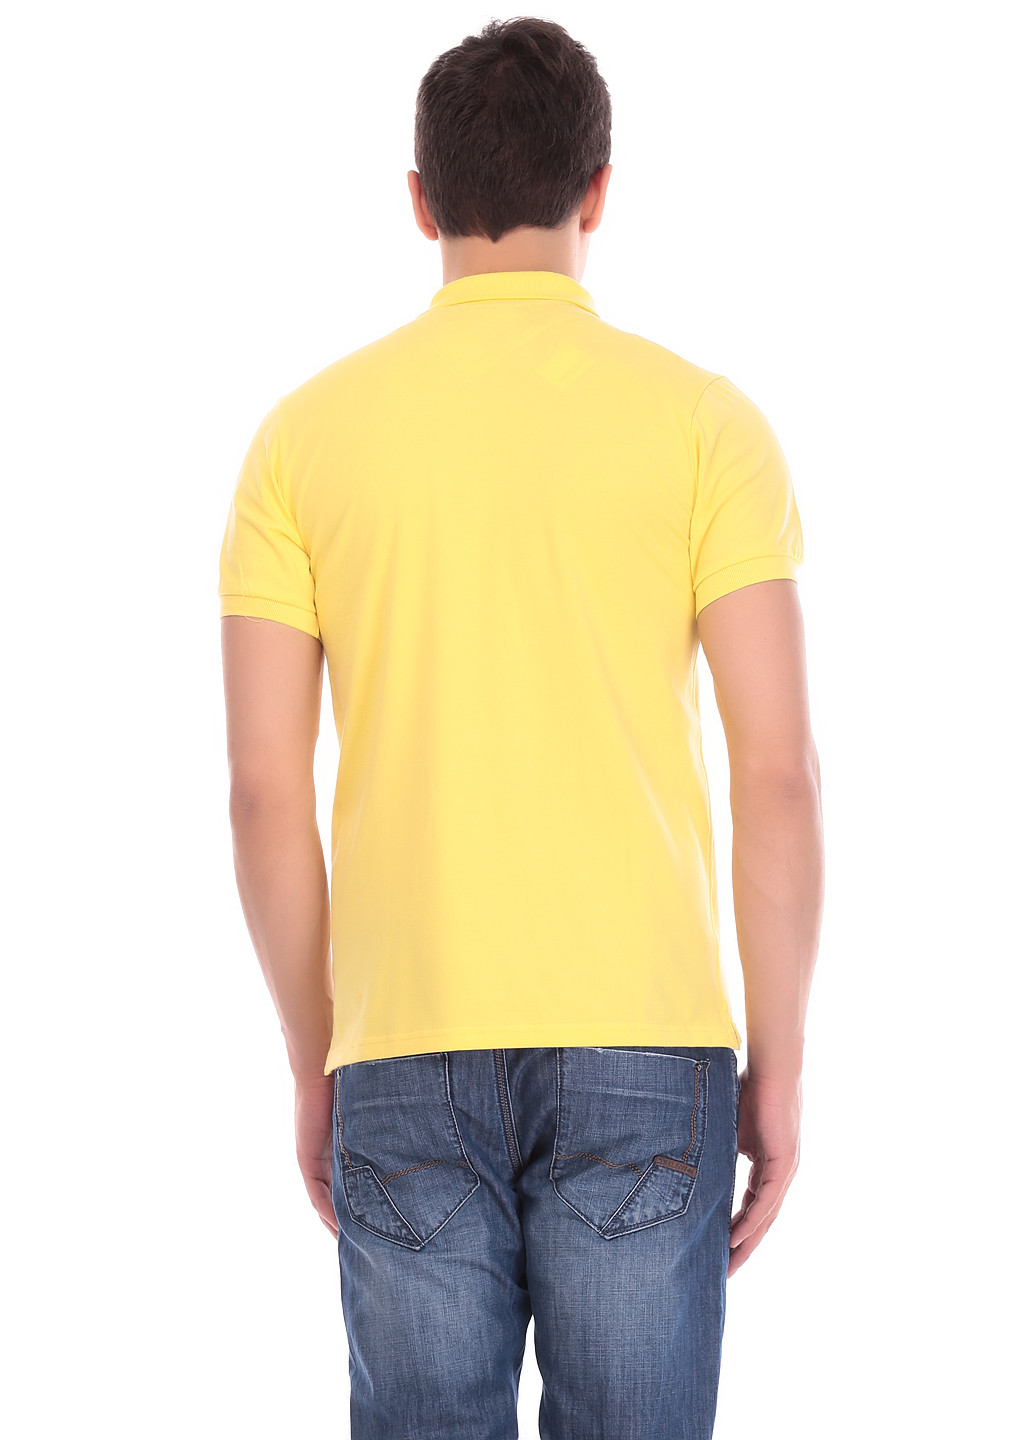 Желтая футболка-поло для мужчин Burberry однотонная